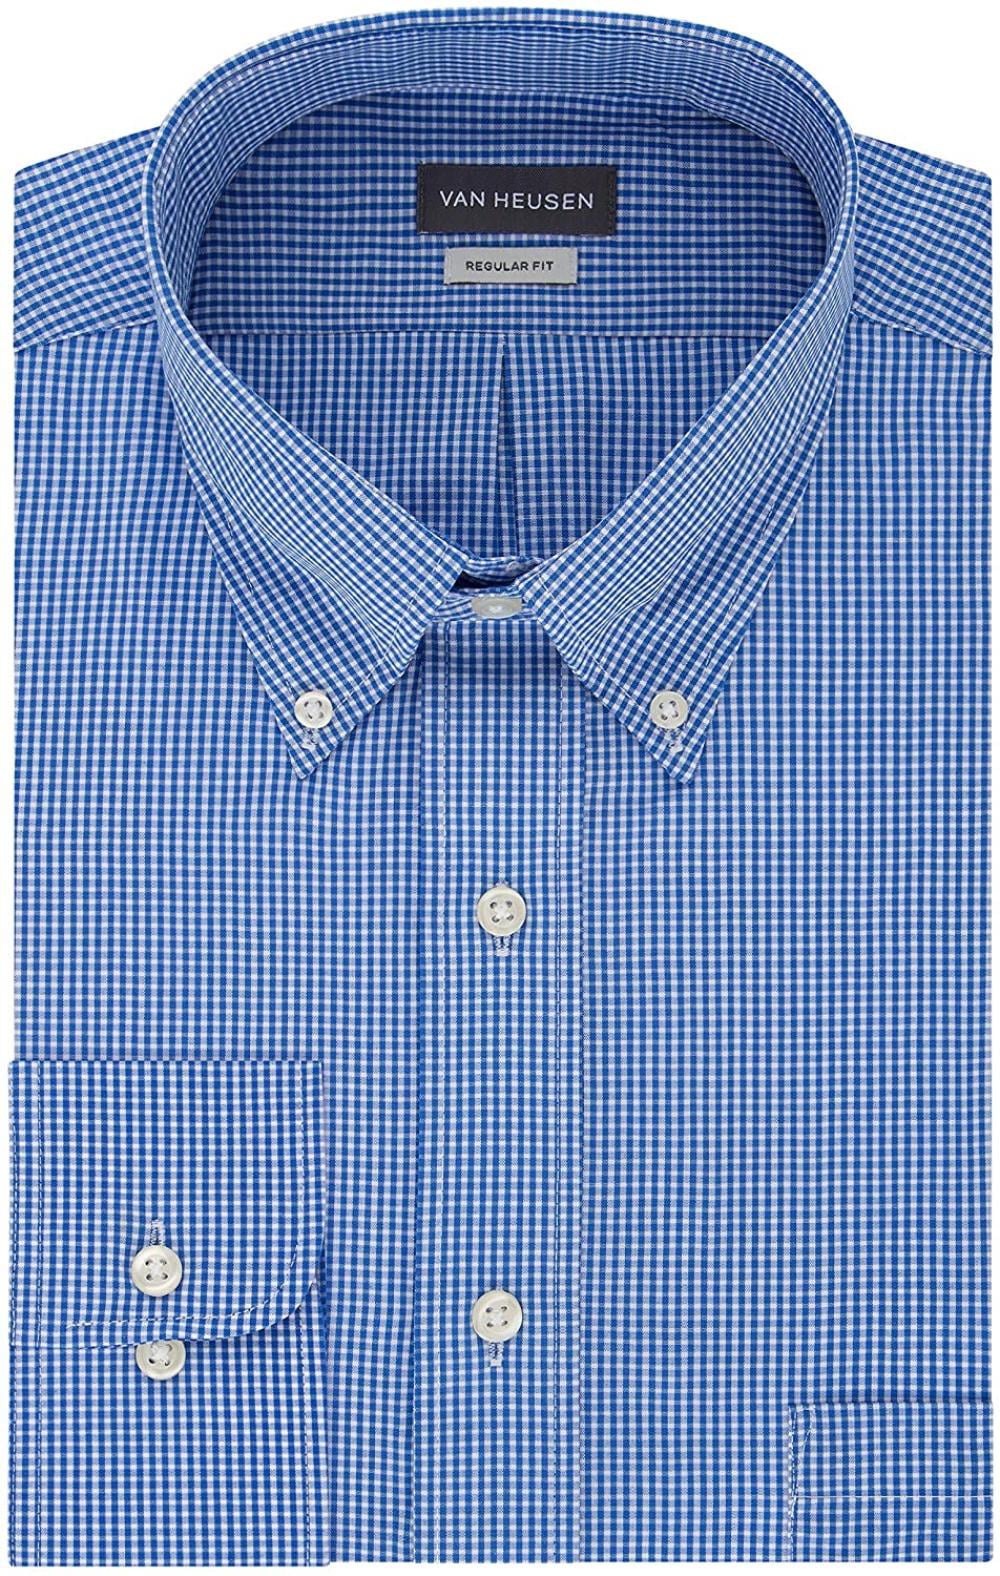 Van Heusen Men/'s Dress Shirt Regular Fit Pinpoint Stripe